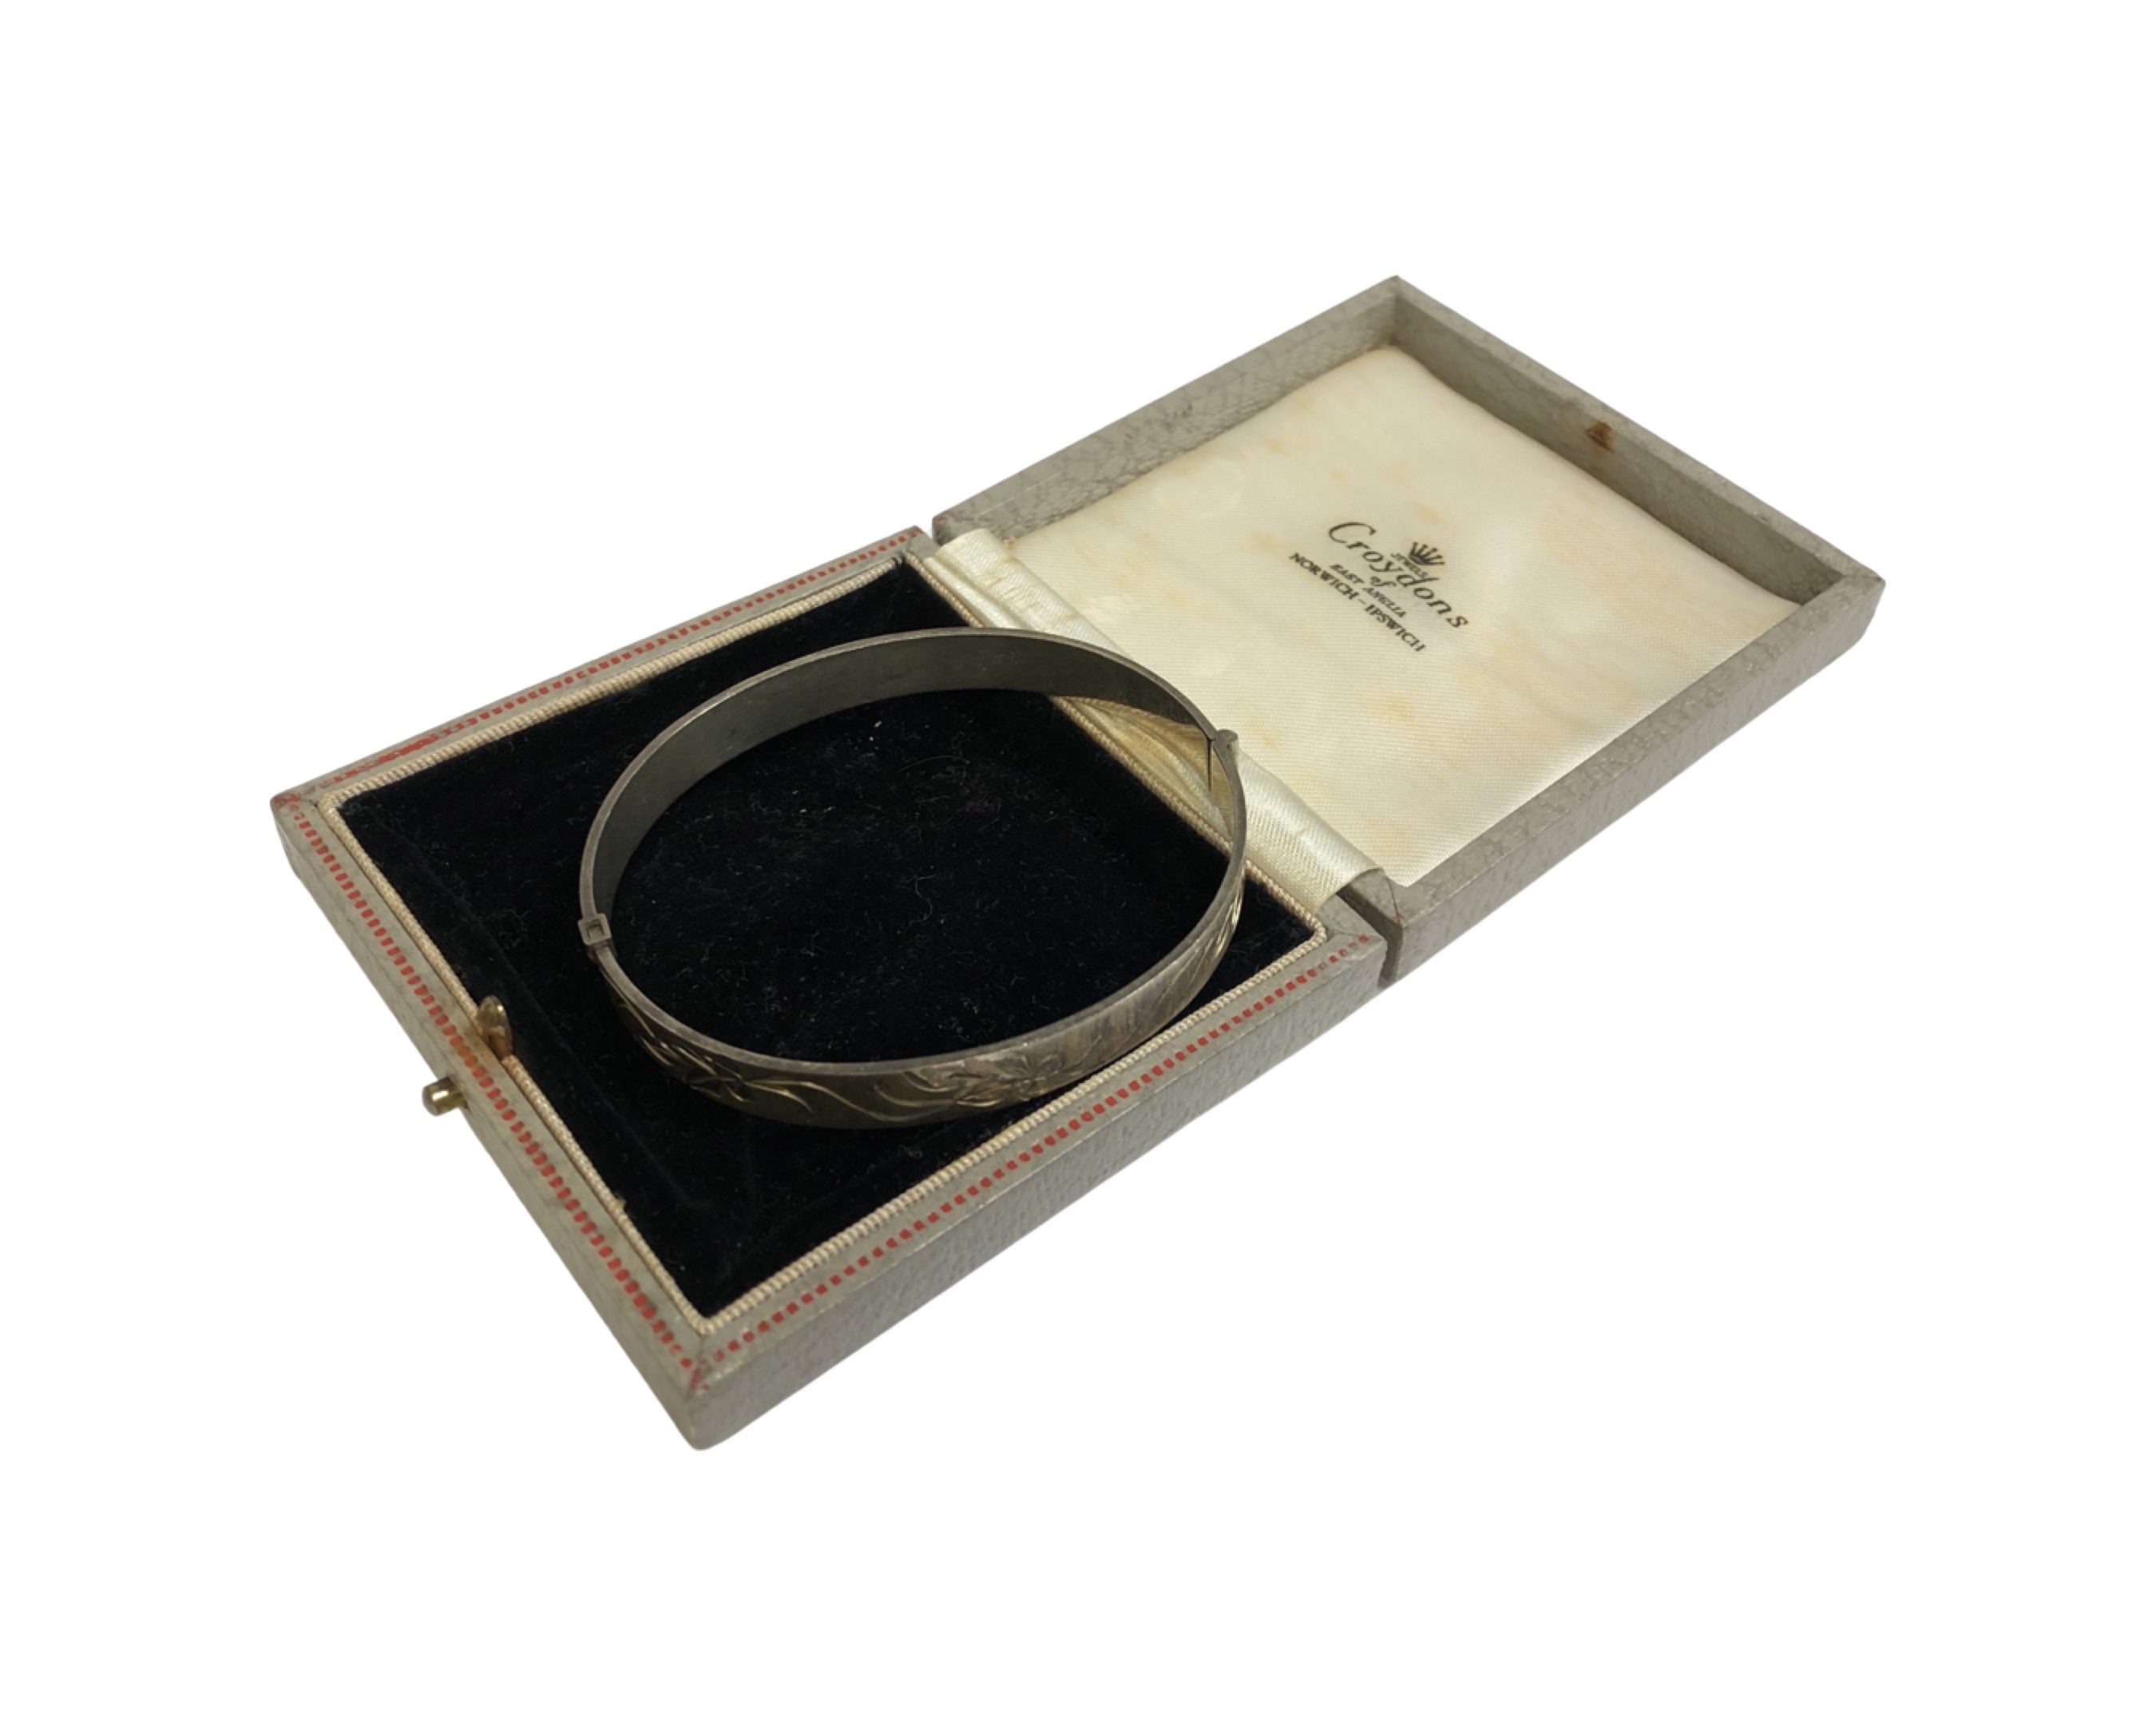 A silver bangle with textured sides and oversized hallmark, Bracelon Ltd, Birmingham 1977, 17. - Image 2 of 2